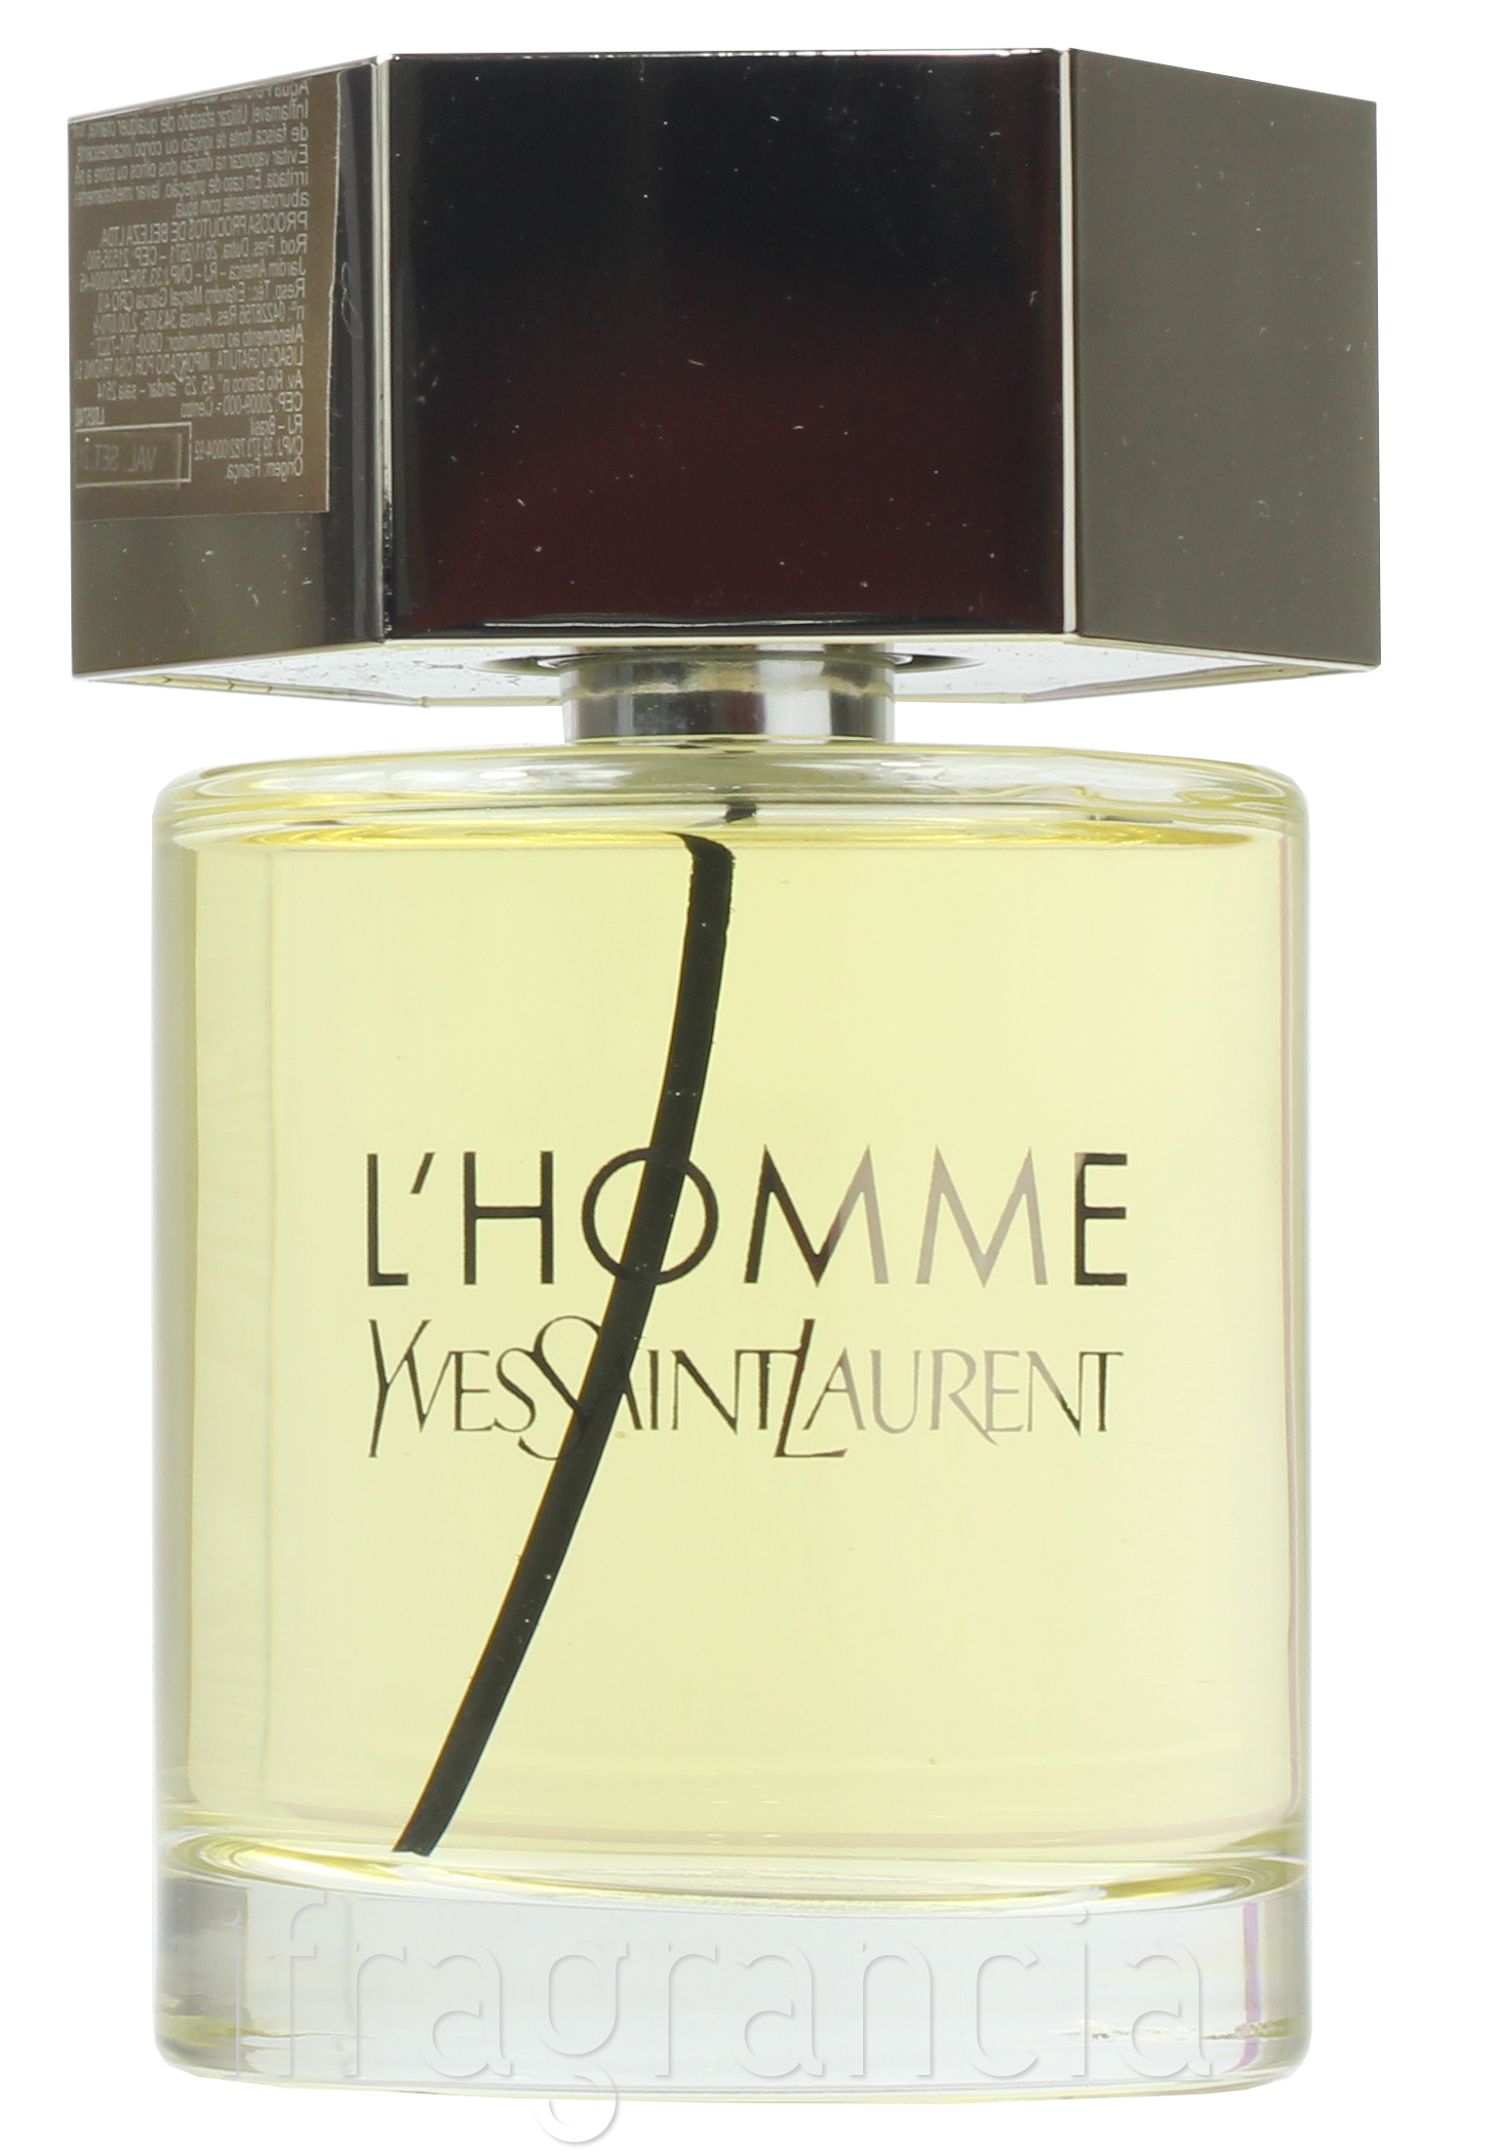 Perfume Lhomme Yves Saint Laurent - imagem 1